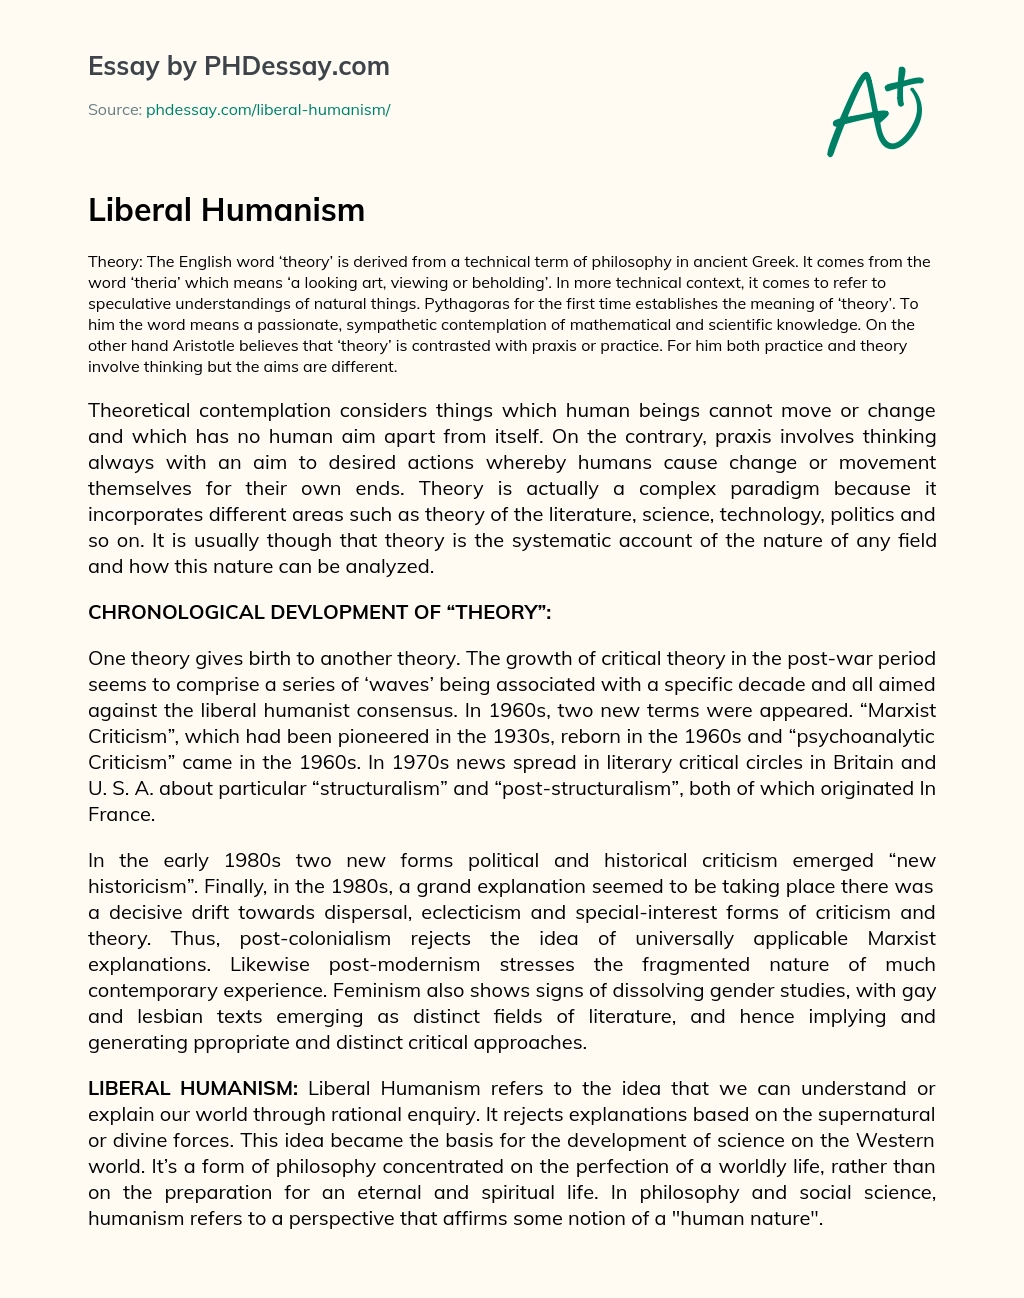 Liberal Humanism essay